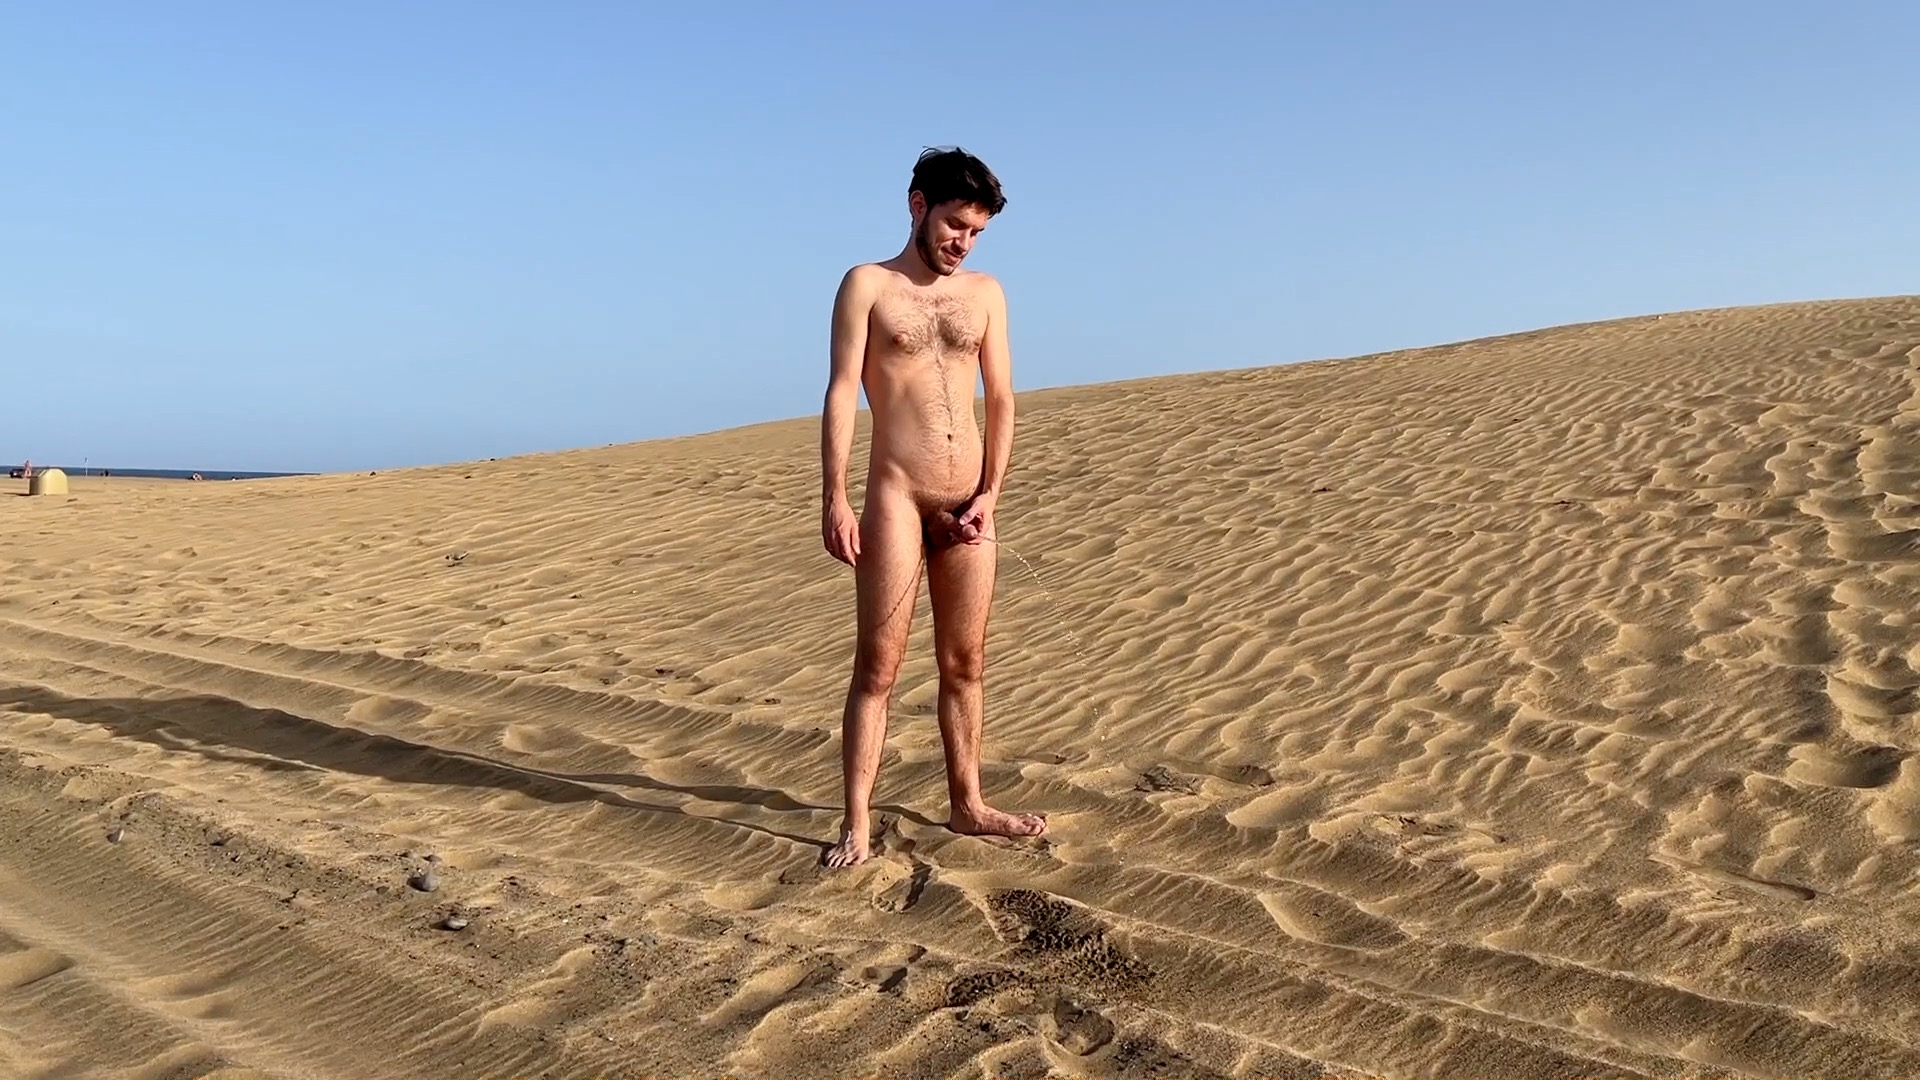 Gay nudist peeing on the nude beach